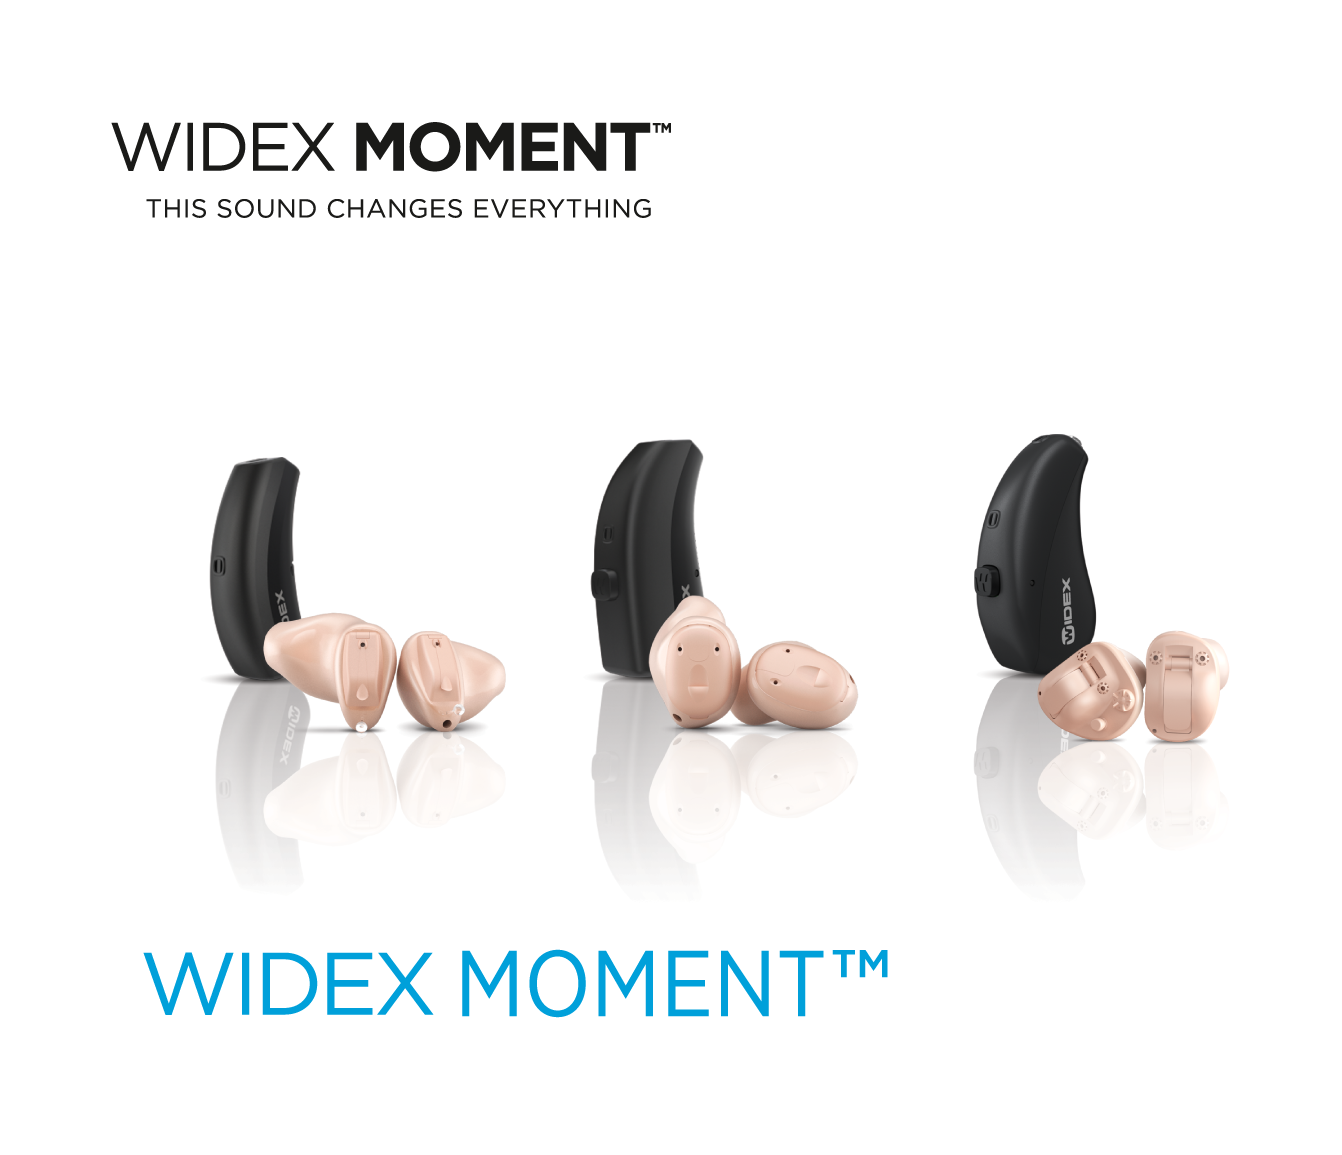 Widex moment